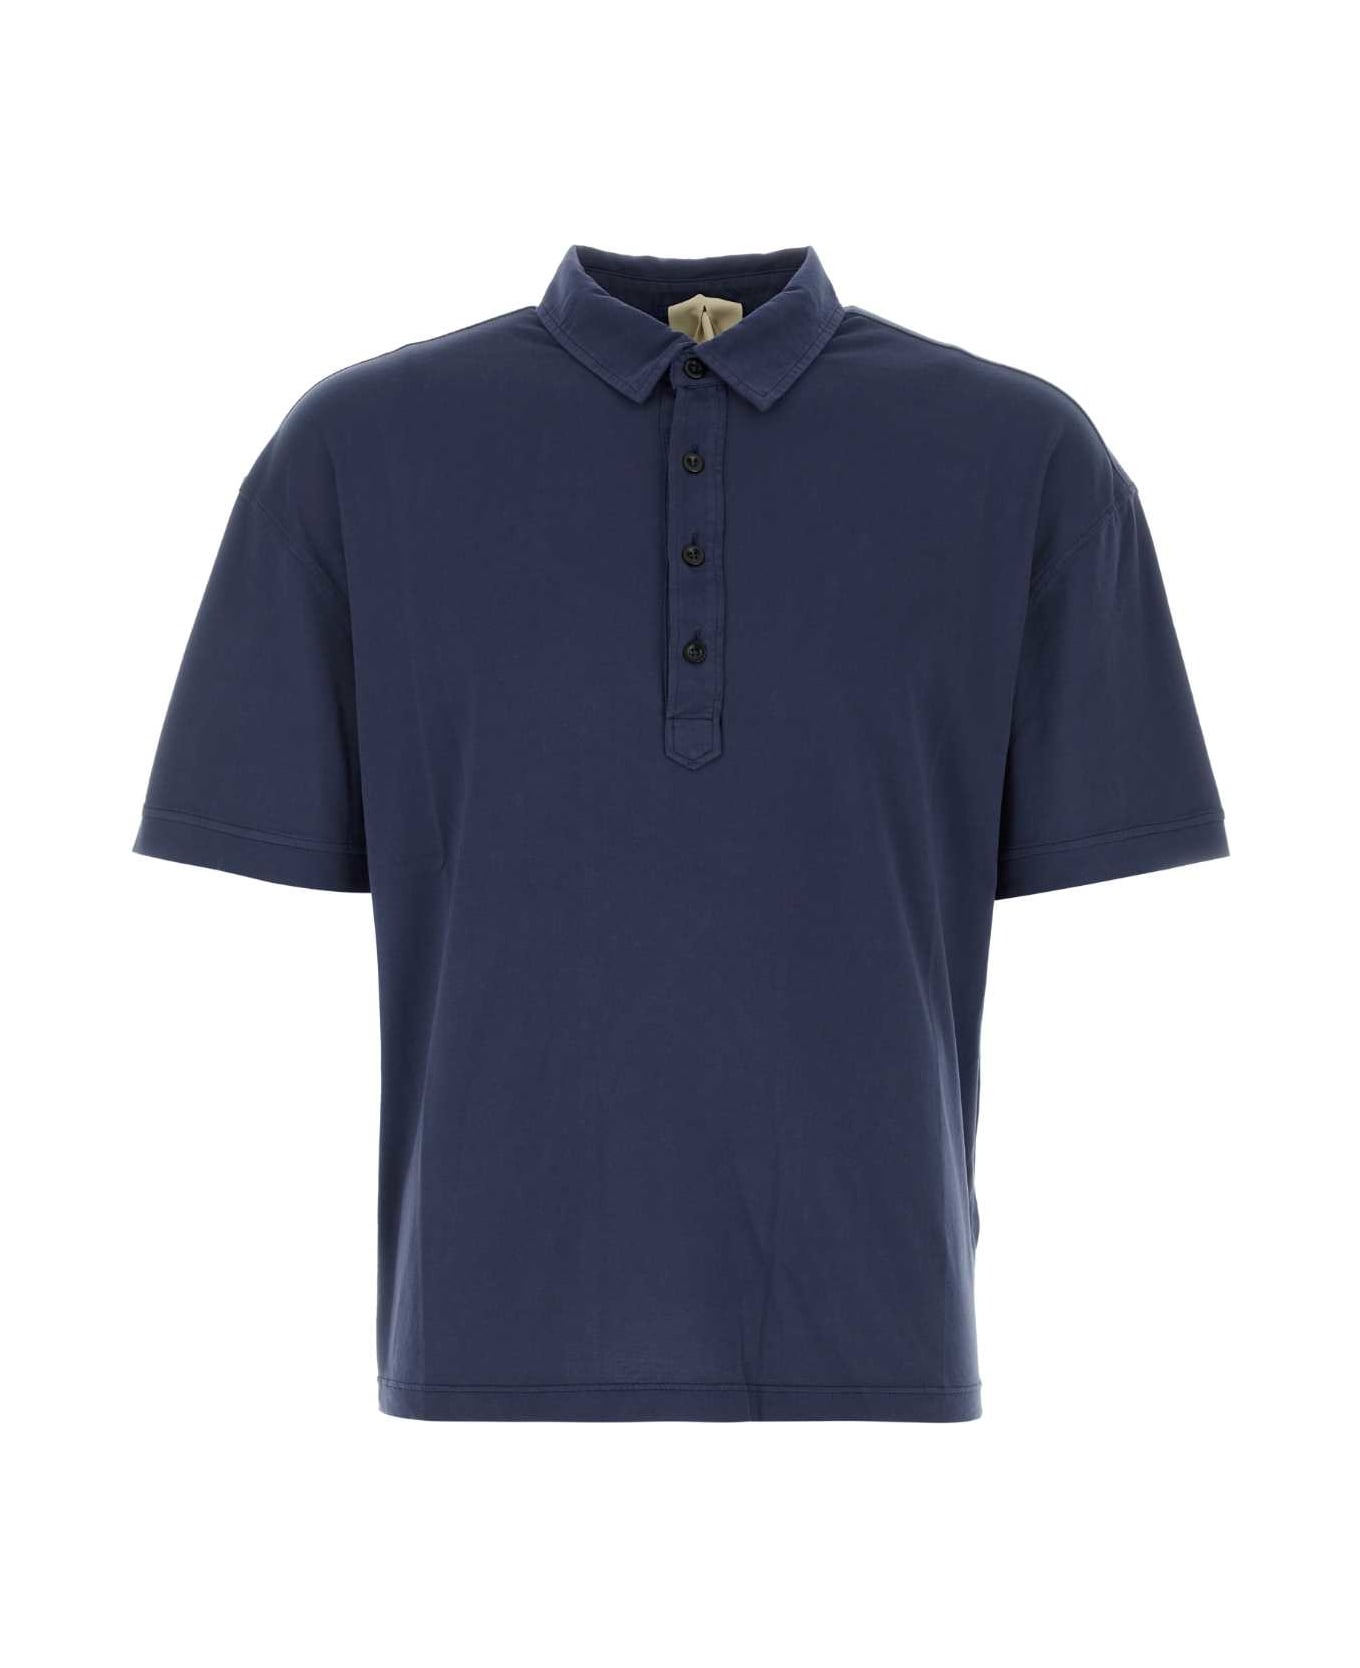 Ten C Navy Blue Cotton Polo Shirt - BLUNOTTE ポロシャツ